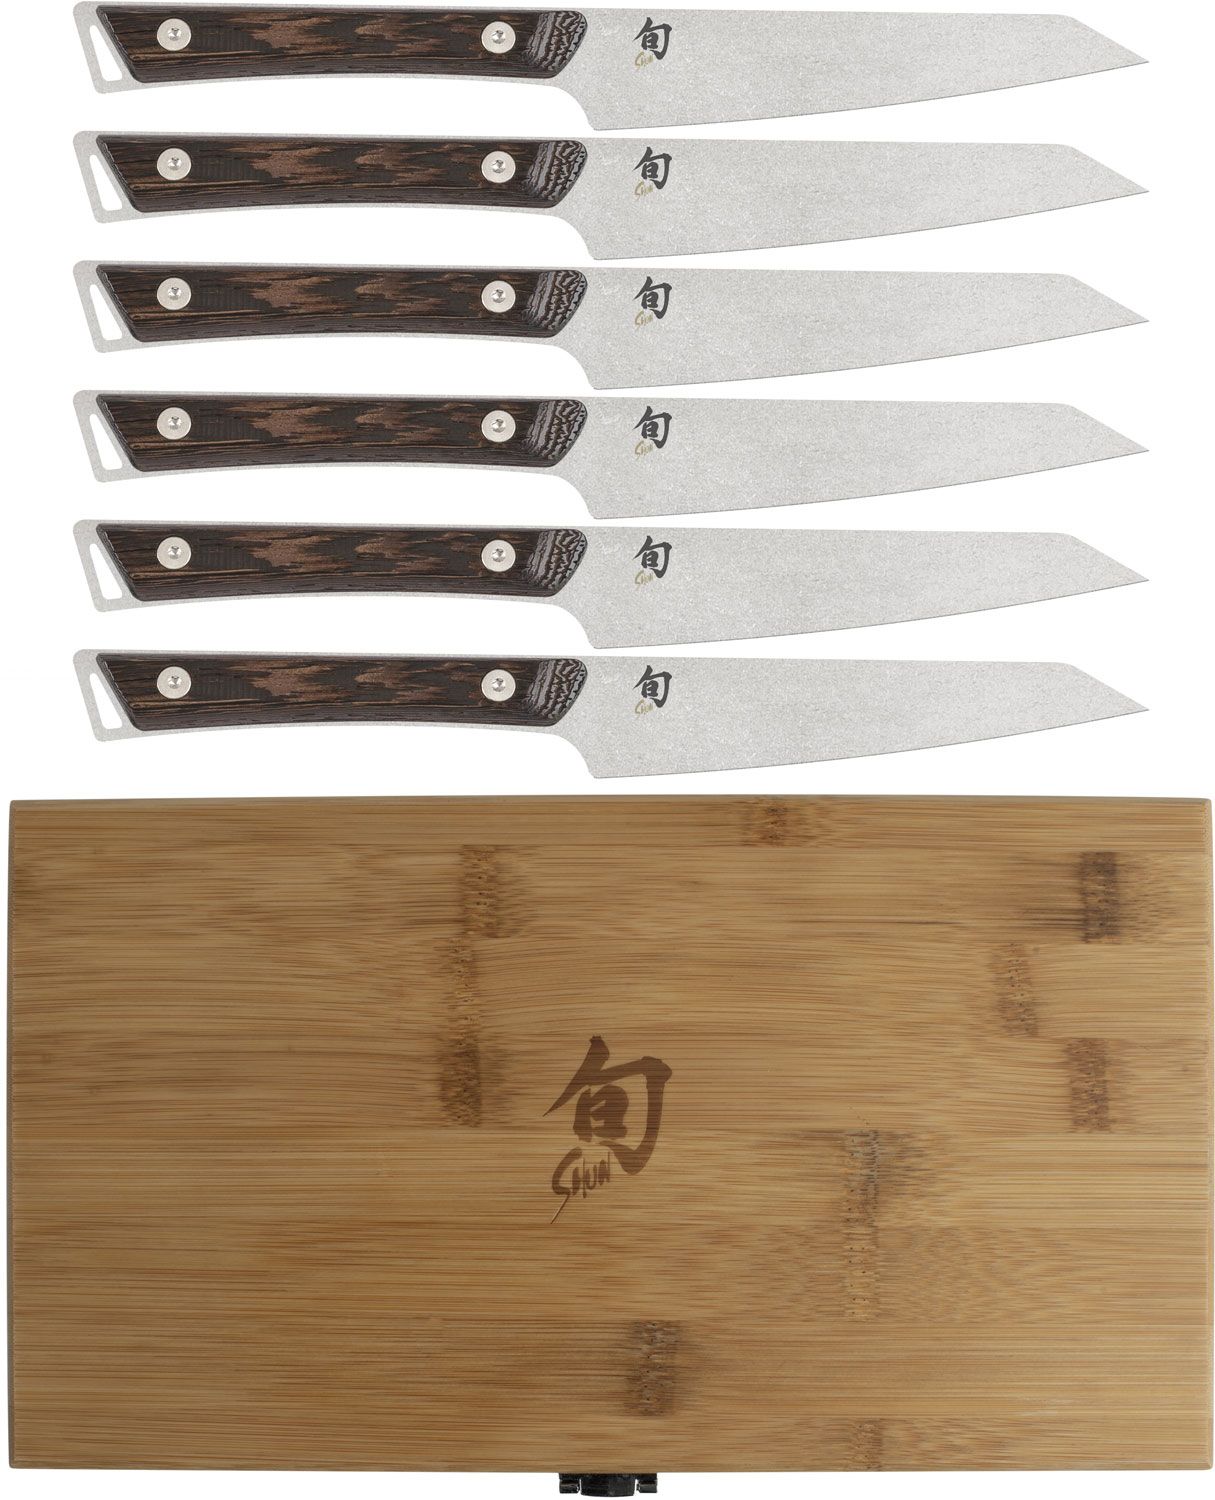 Shun Kanso 4-Piece BBQ Knife Set at Swiss Knife Shop